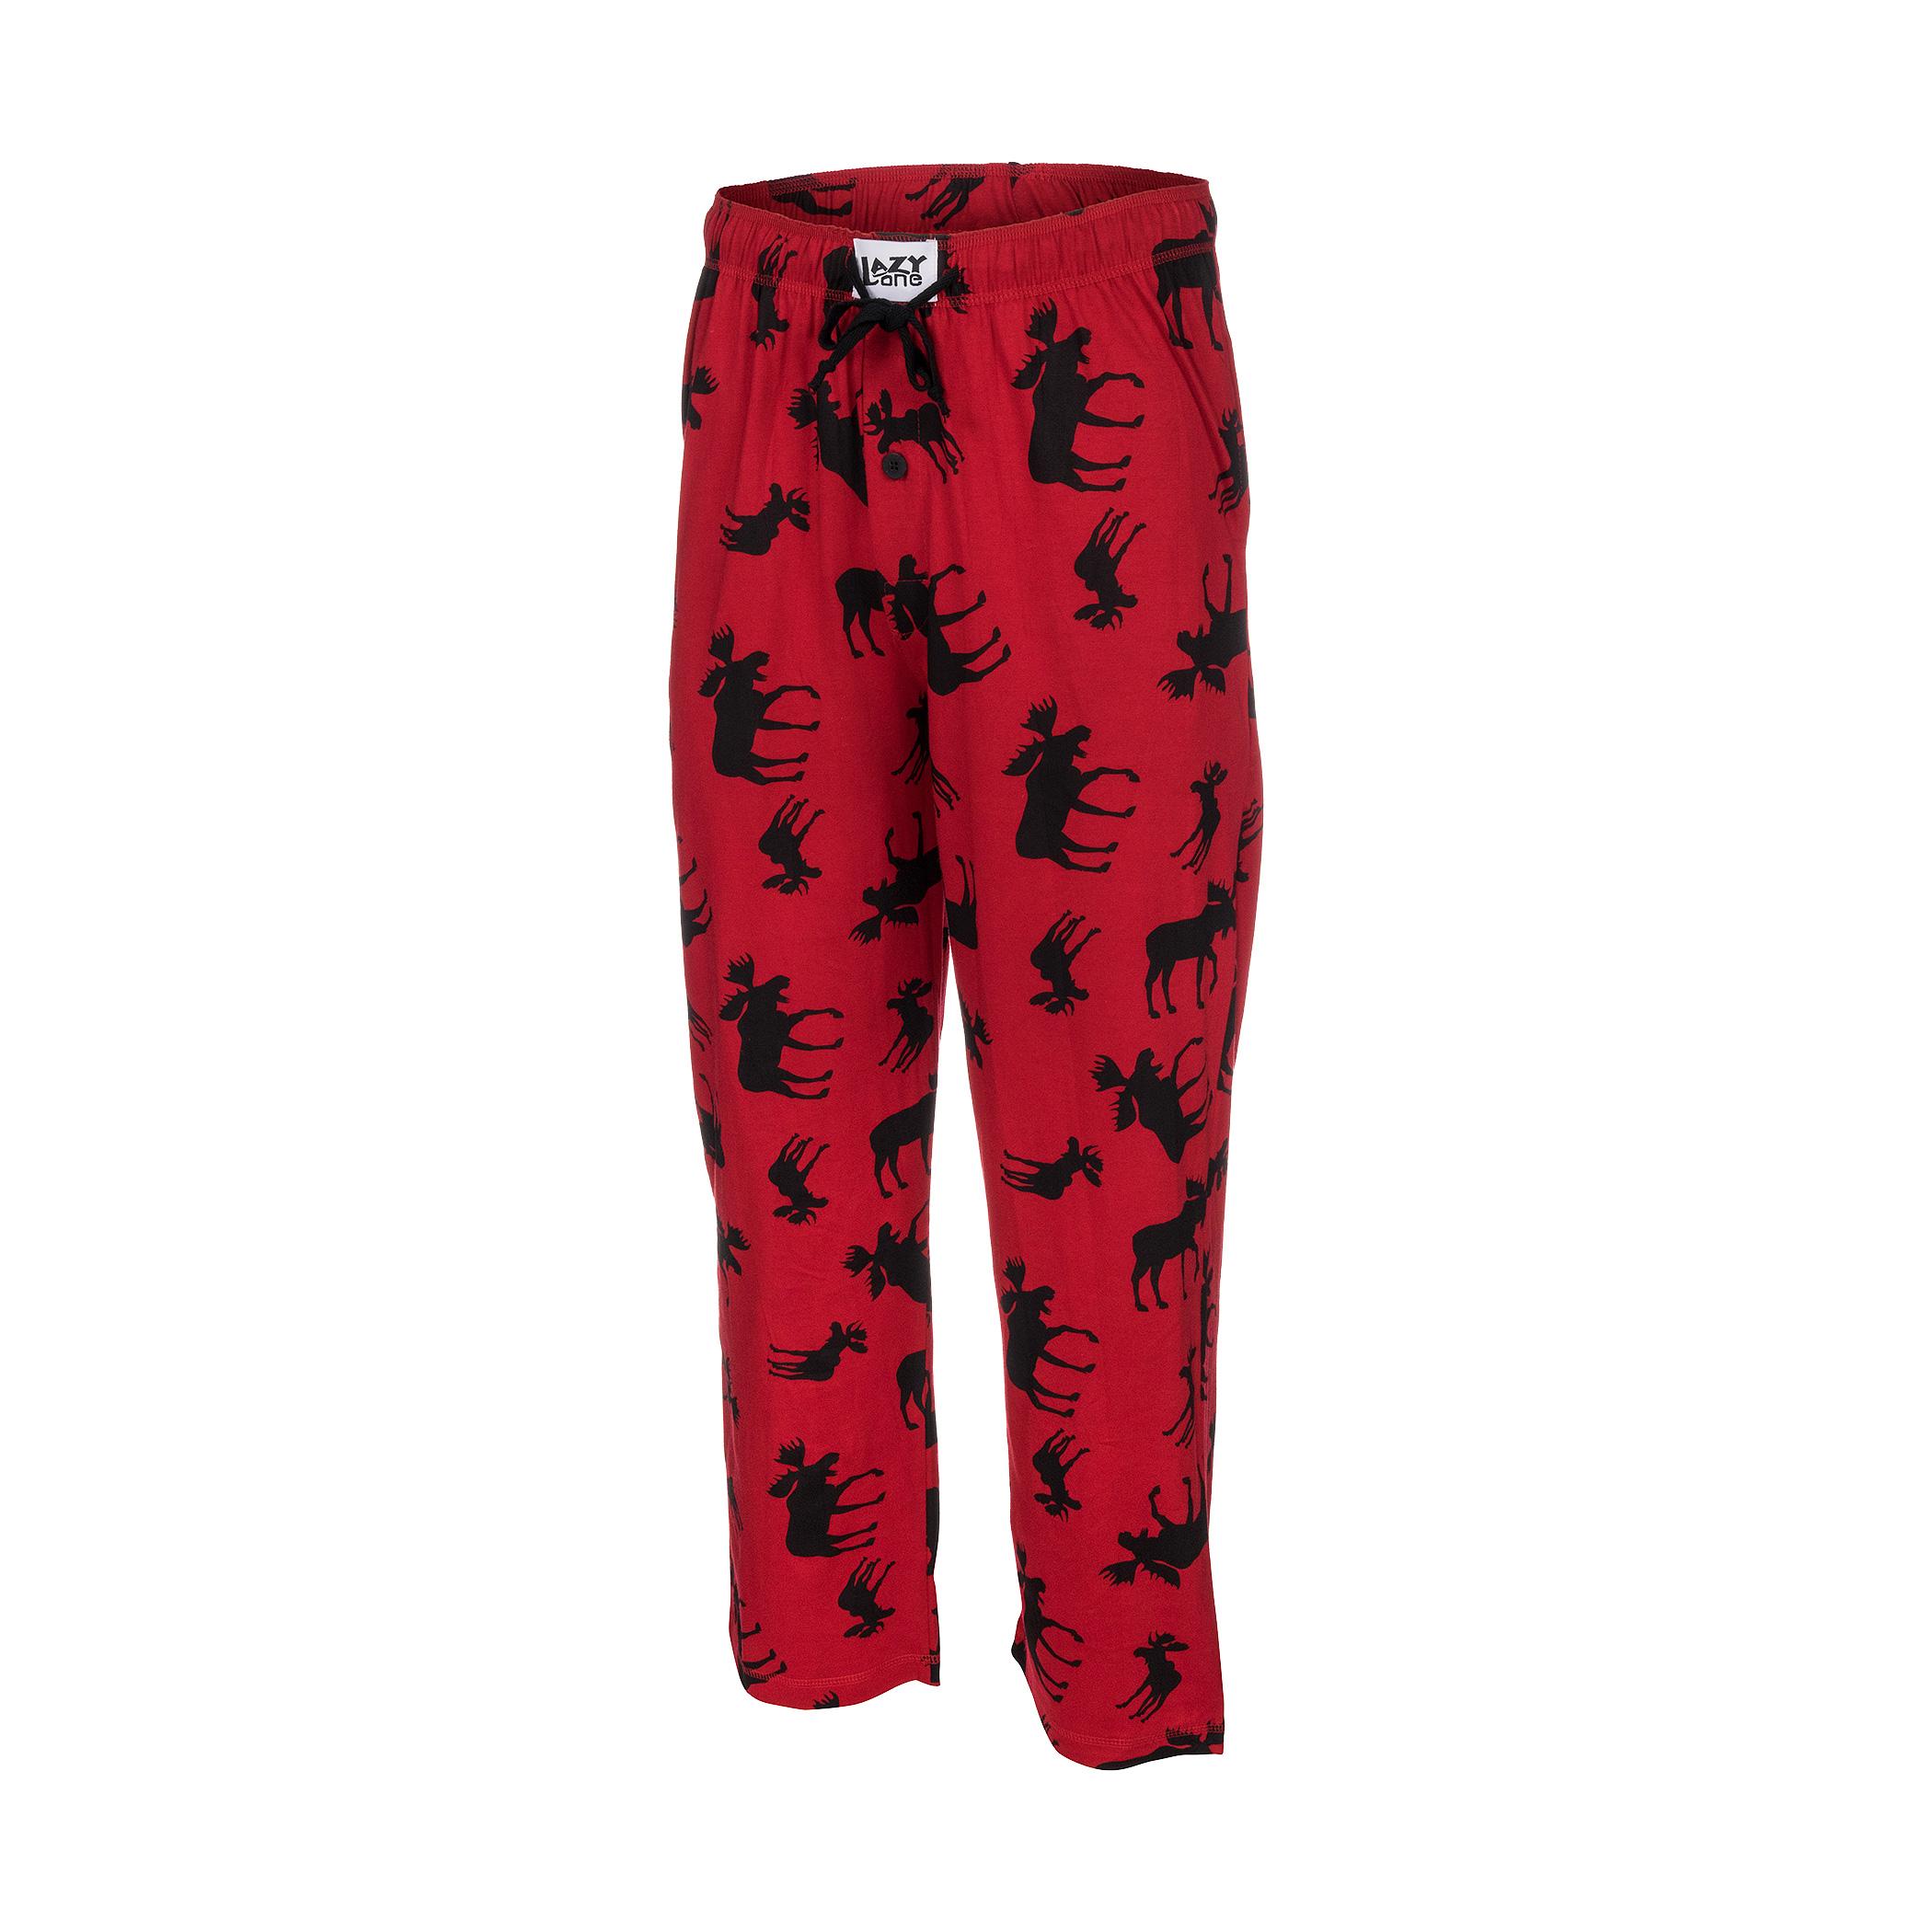 Men's Moose Plaid Pajama Shorts - Adirondack Country Store